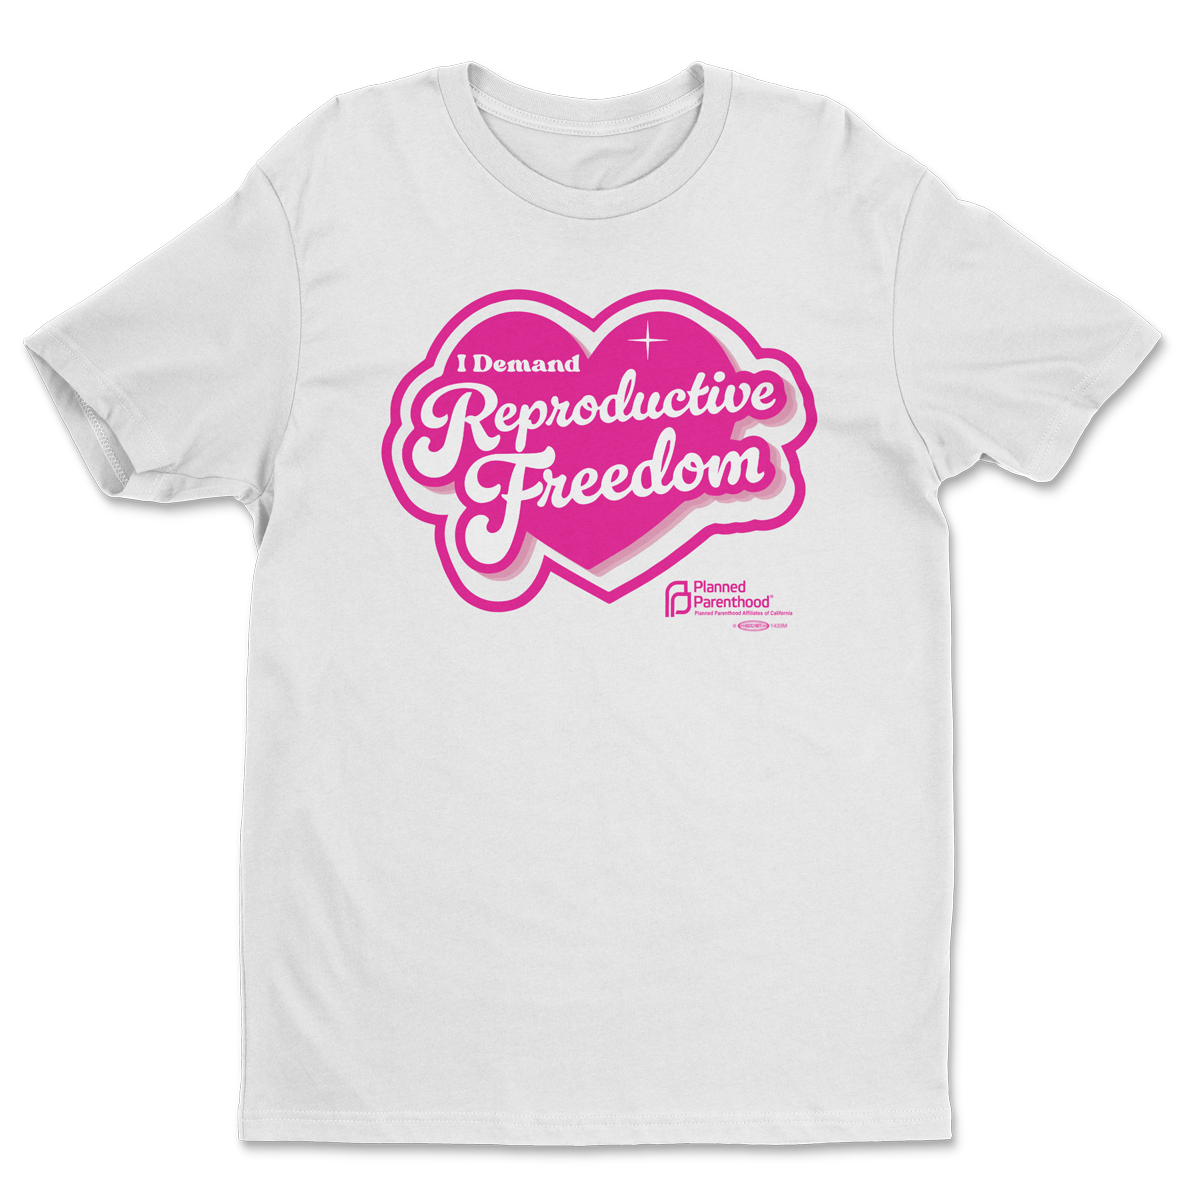 I Demand Reproductive Freedom T-shirt